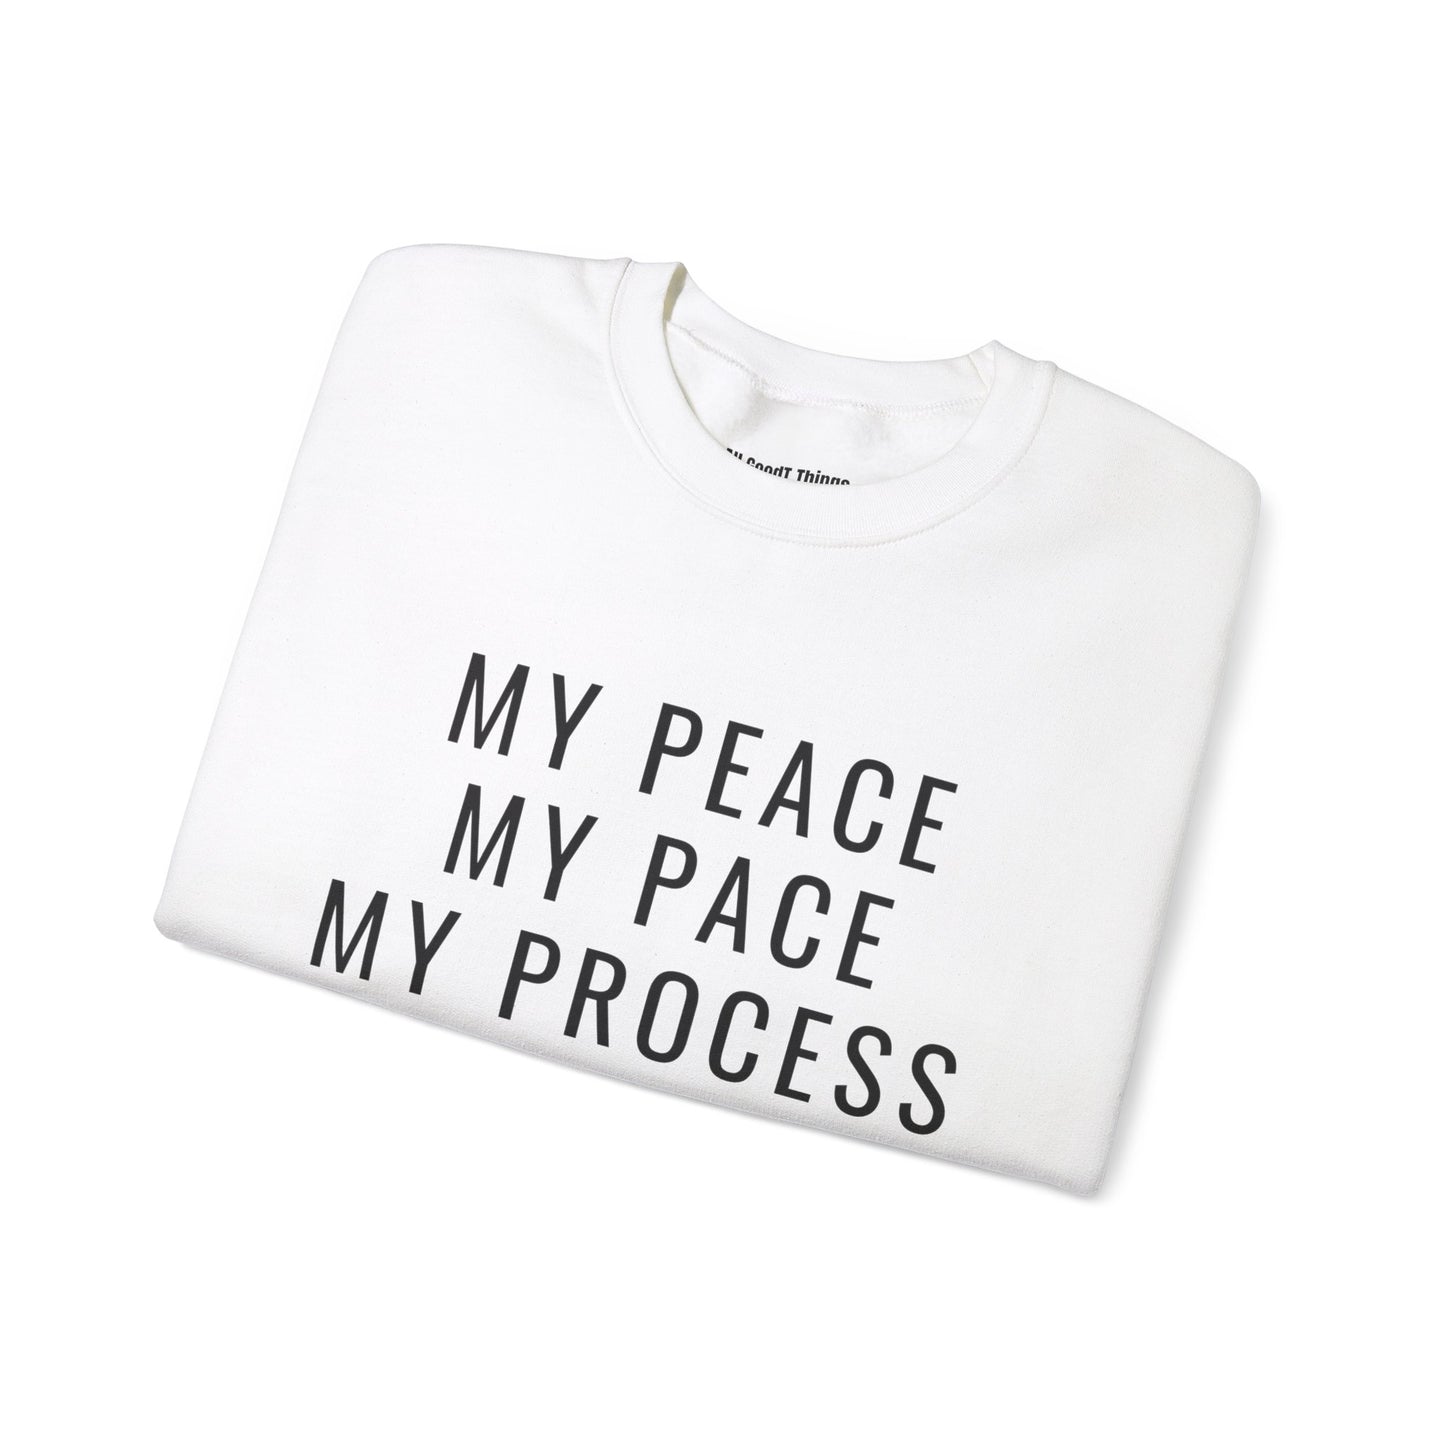 Viola's Drip: My Peace| My Pace| My Process